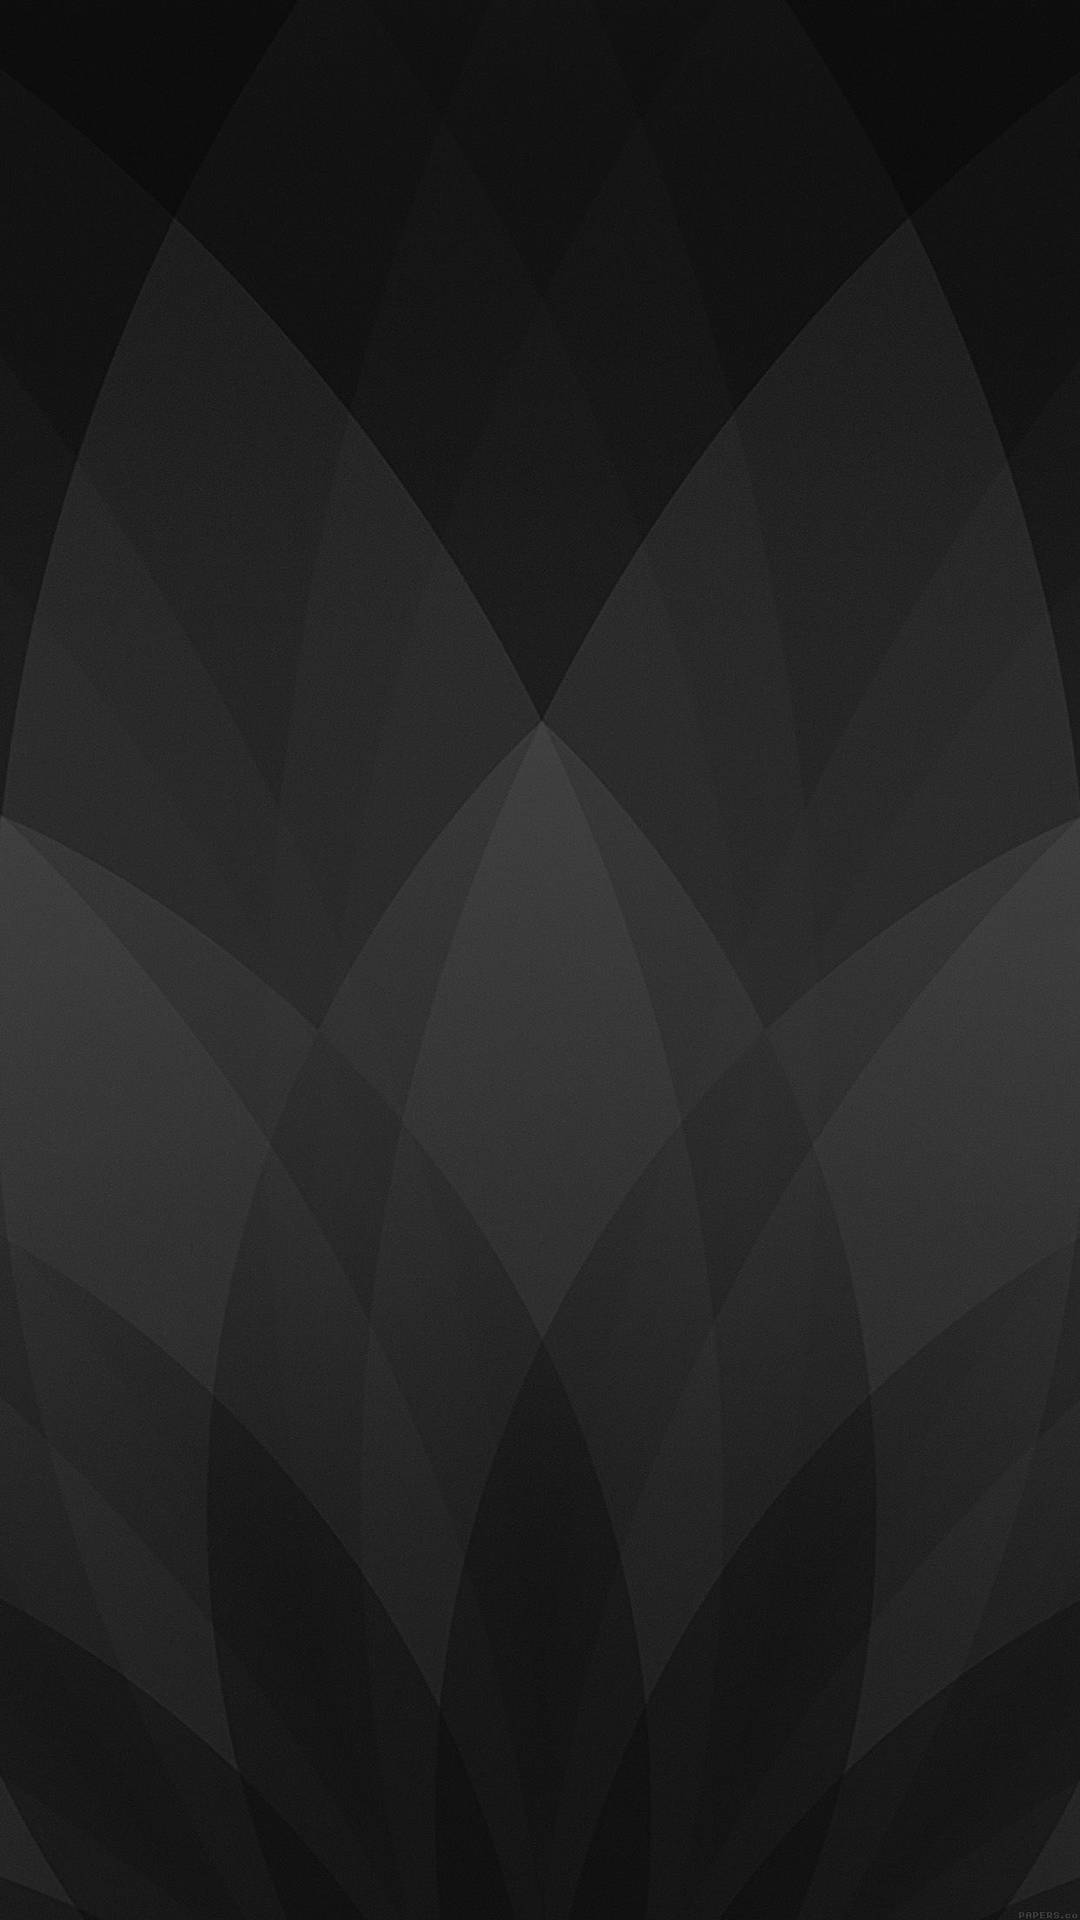 Fanned Leaf Solid Black Iphone Background